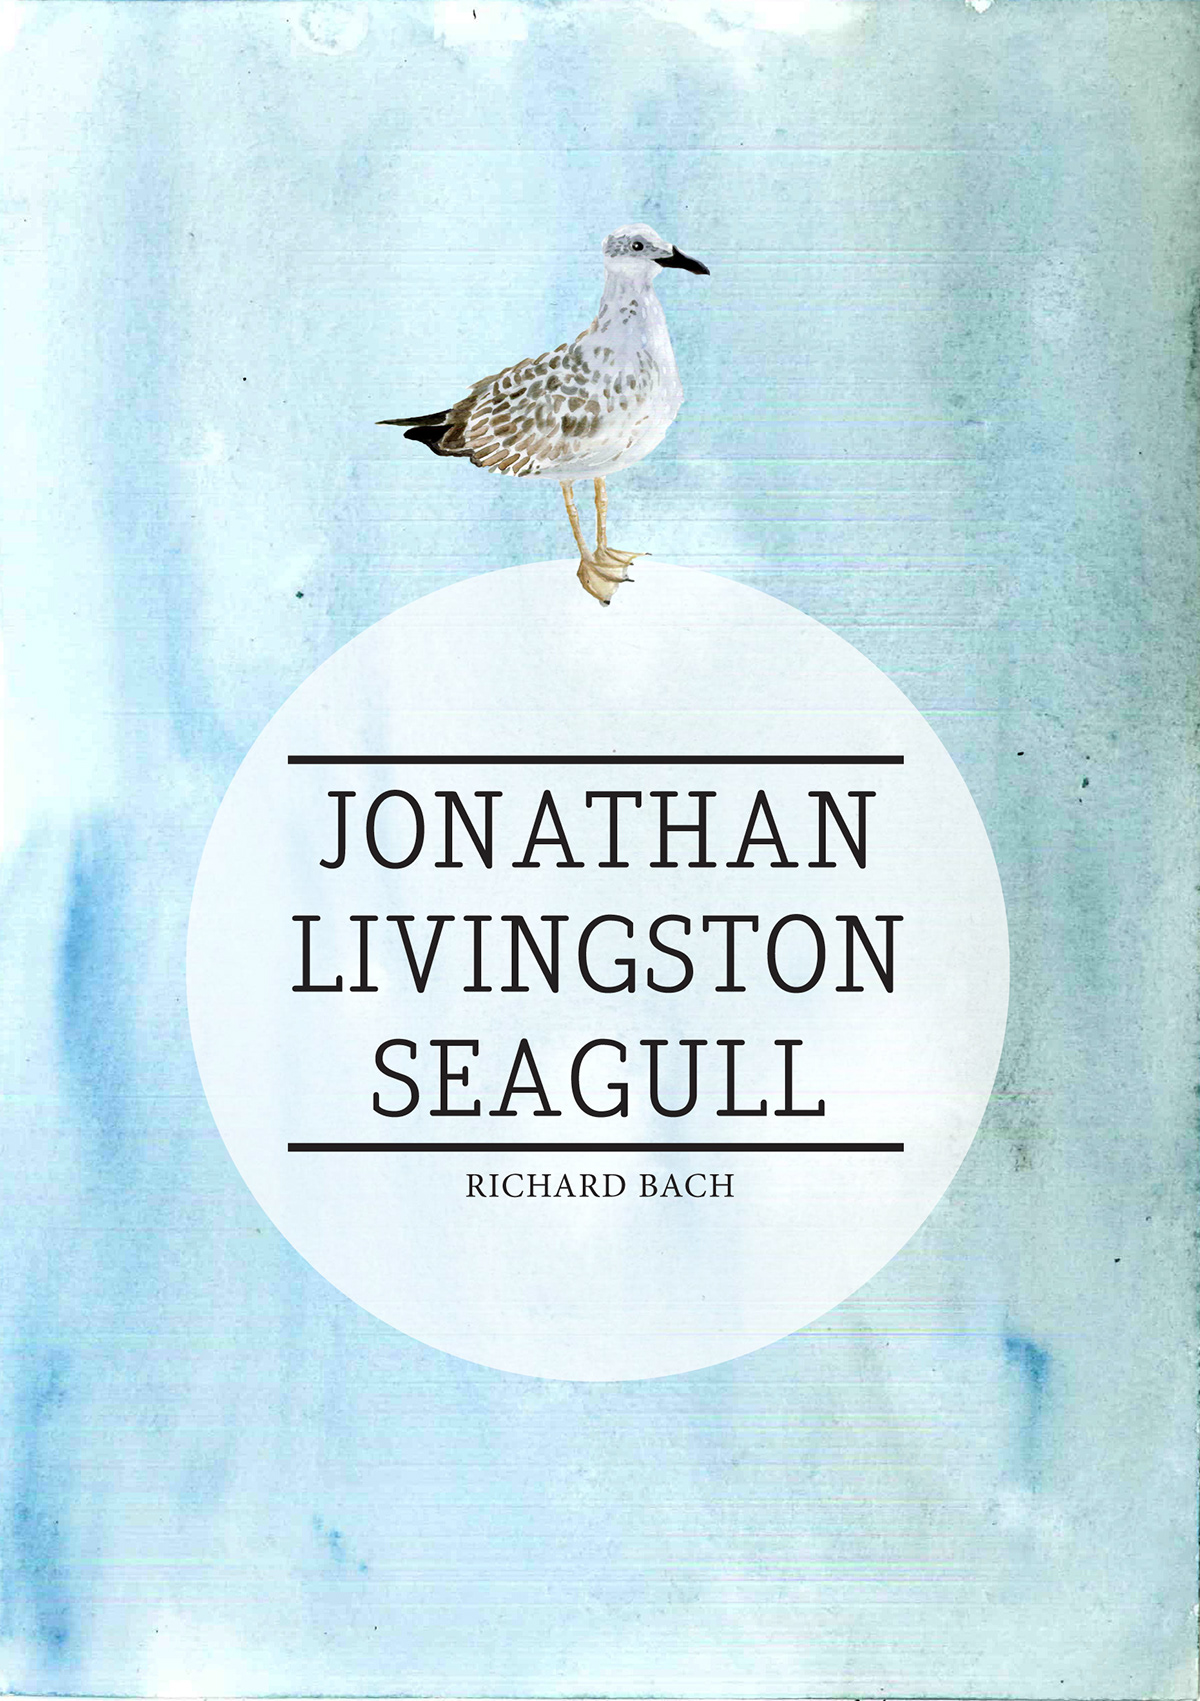 bird seagull gull book richard bach inspirational sea Fly flight